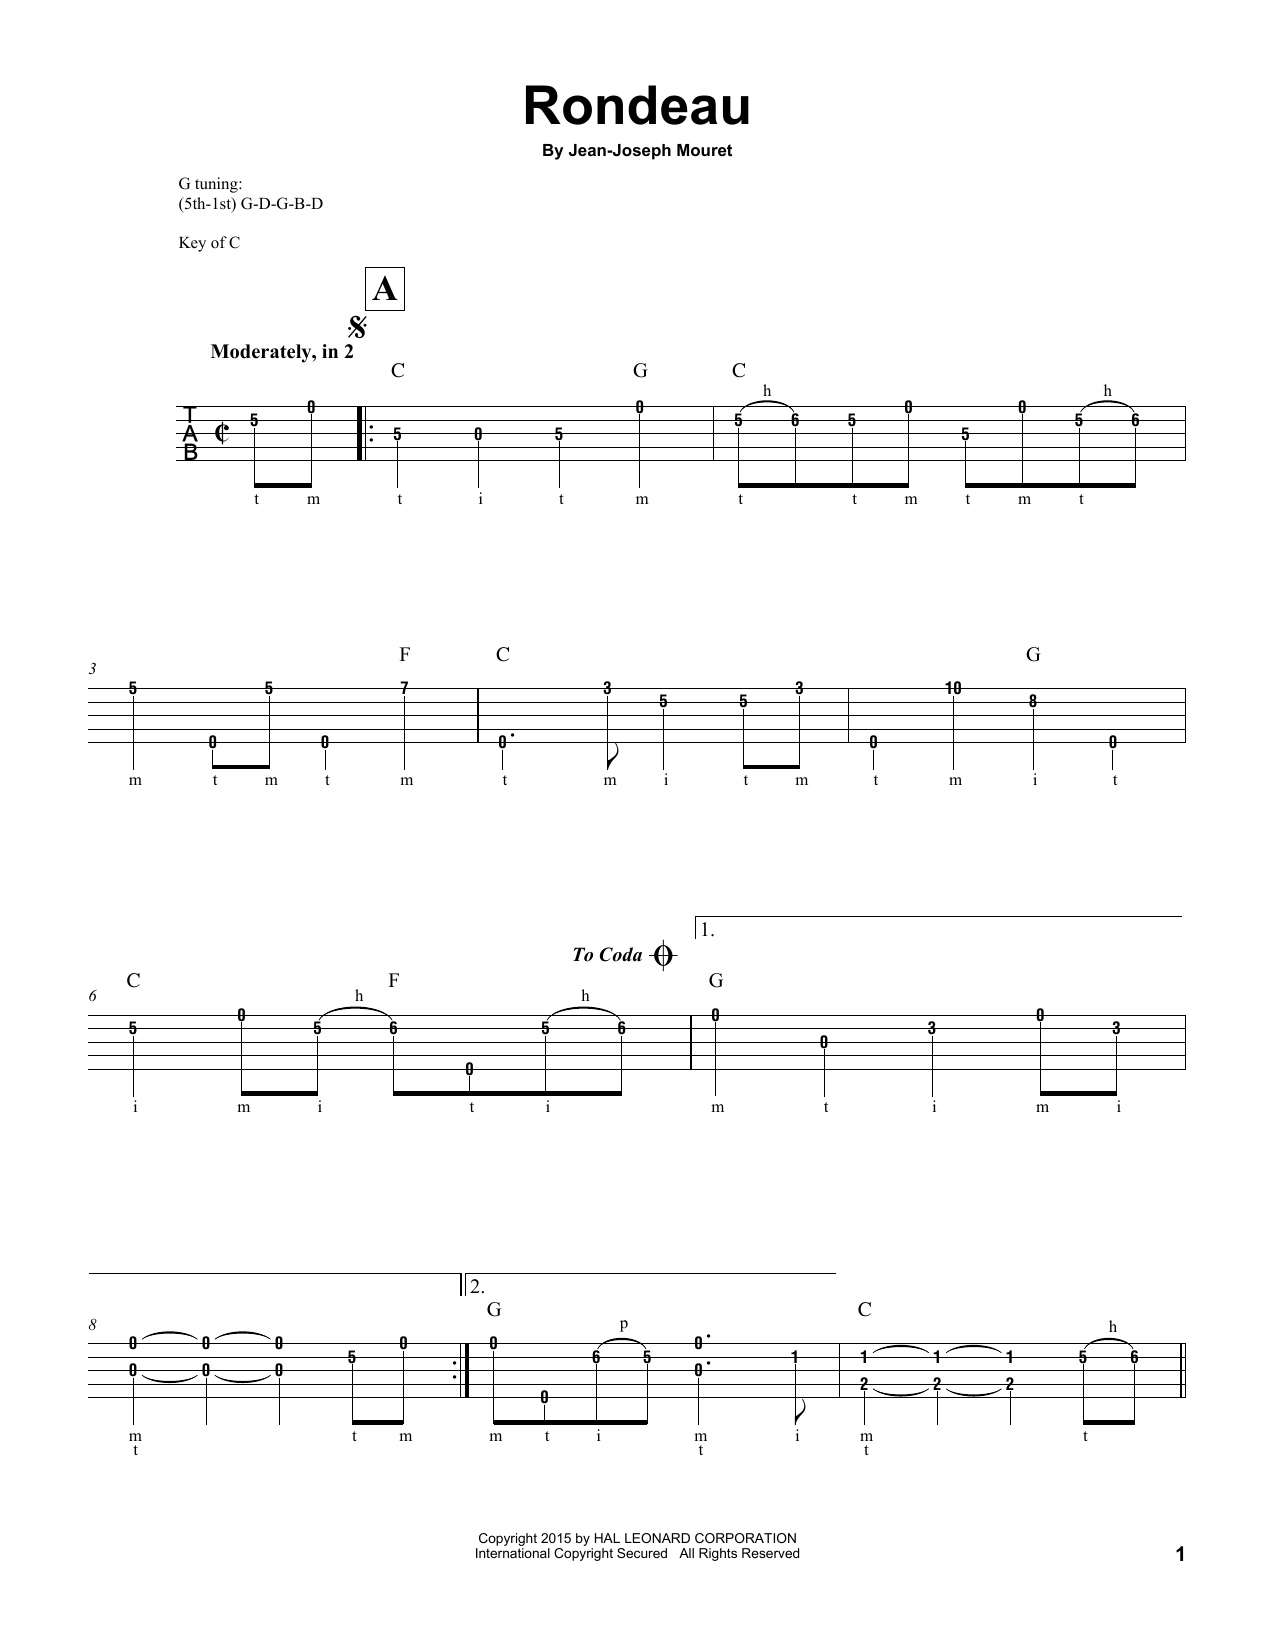 Jean-Joseph Mouret Fanfare Rondeau Sheet Music Notes & Chords for Banjo - Download or Print PDF